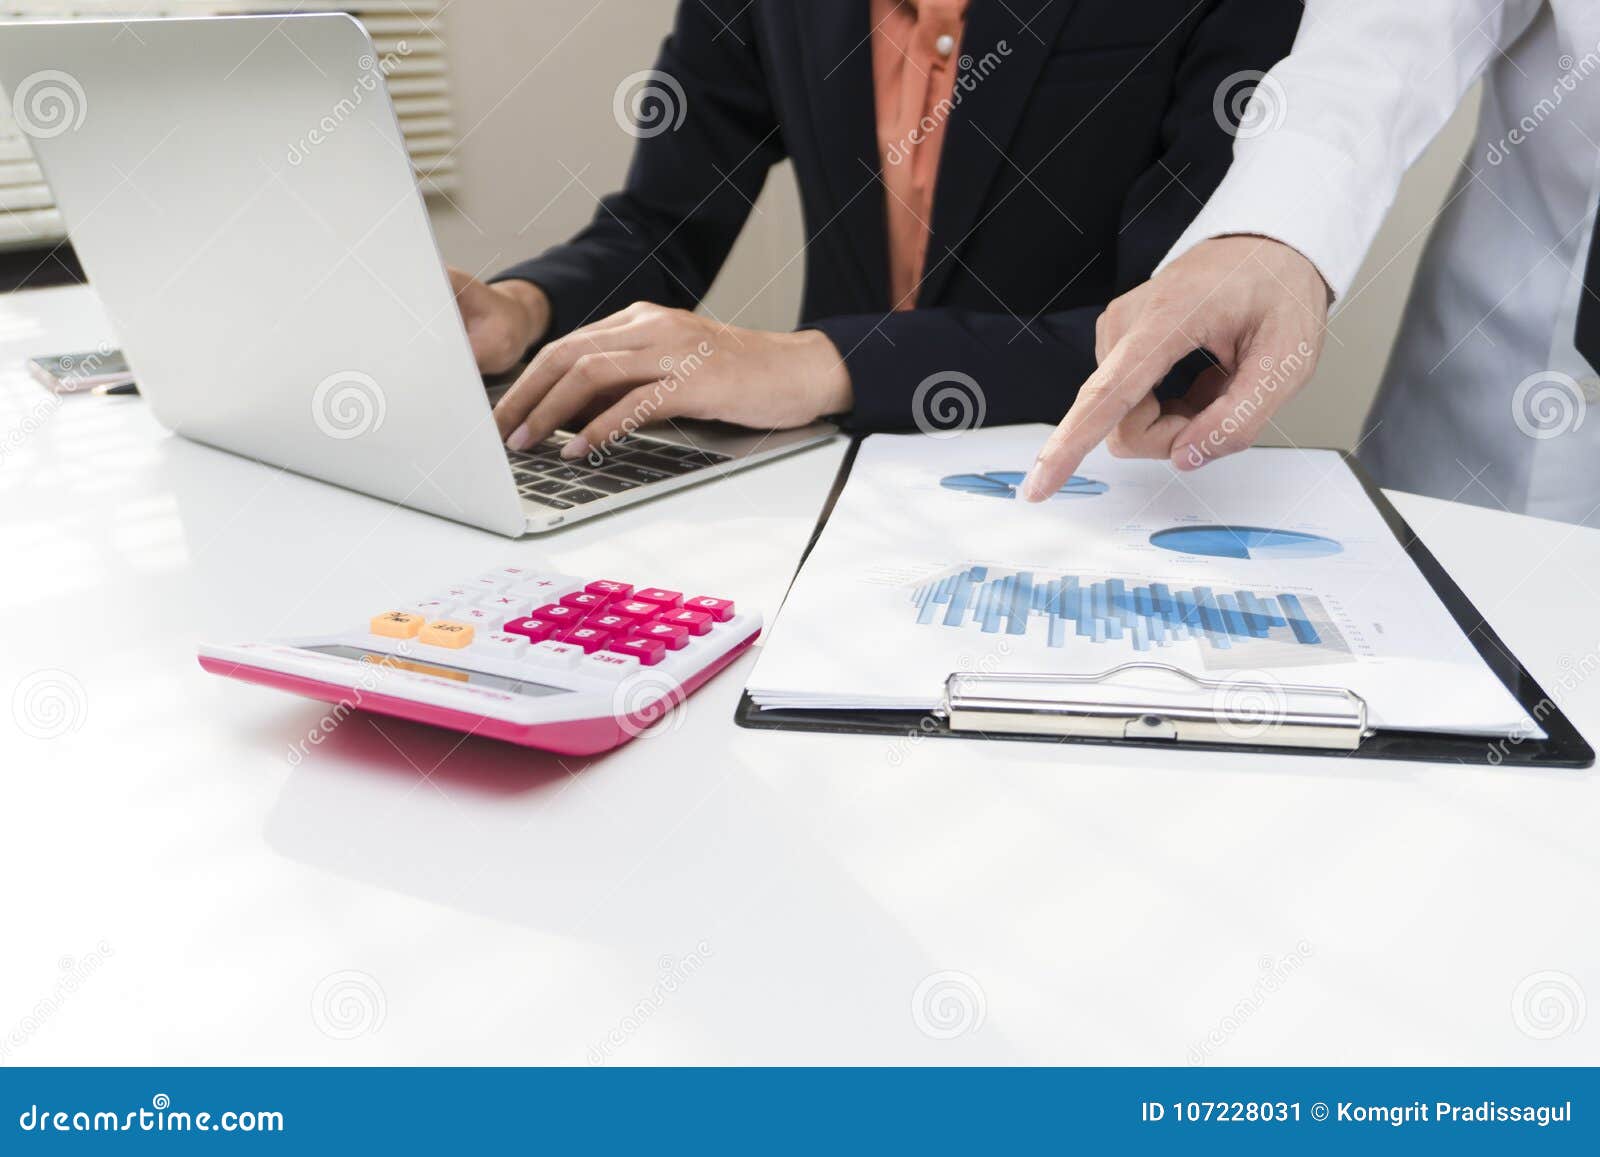 businessman working at home office desk background, desk musicians,checklist planning investigate enthusiastic concept.